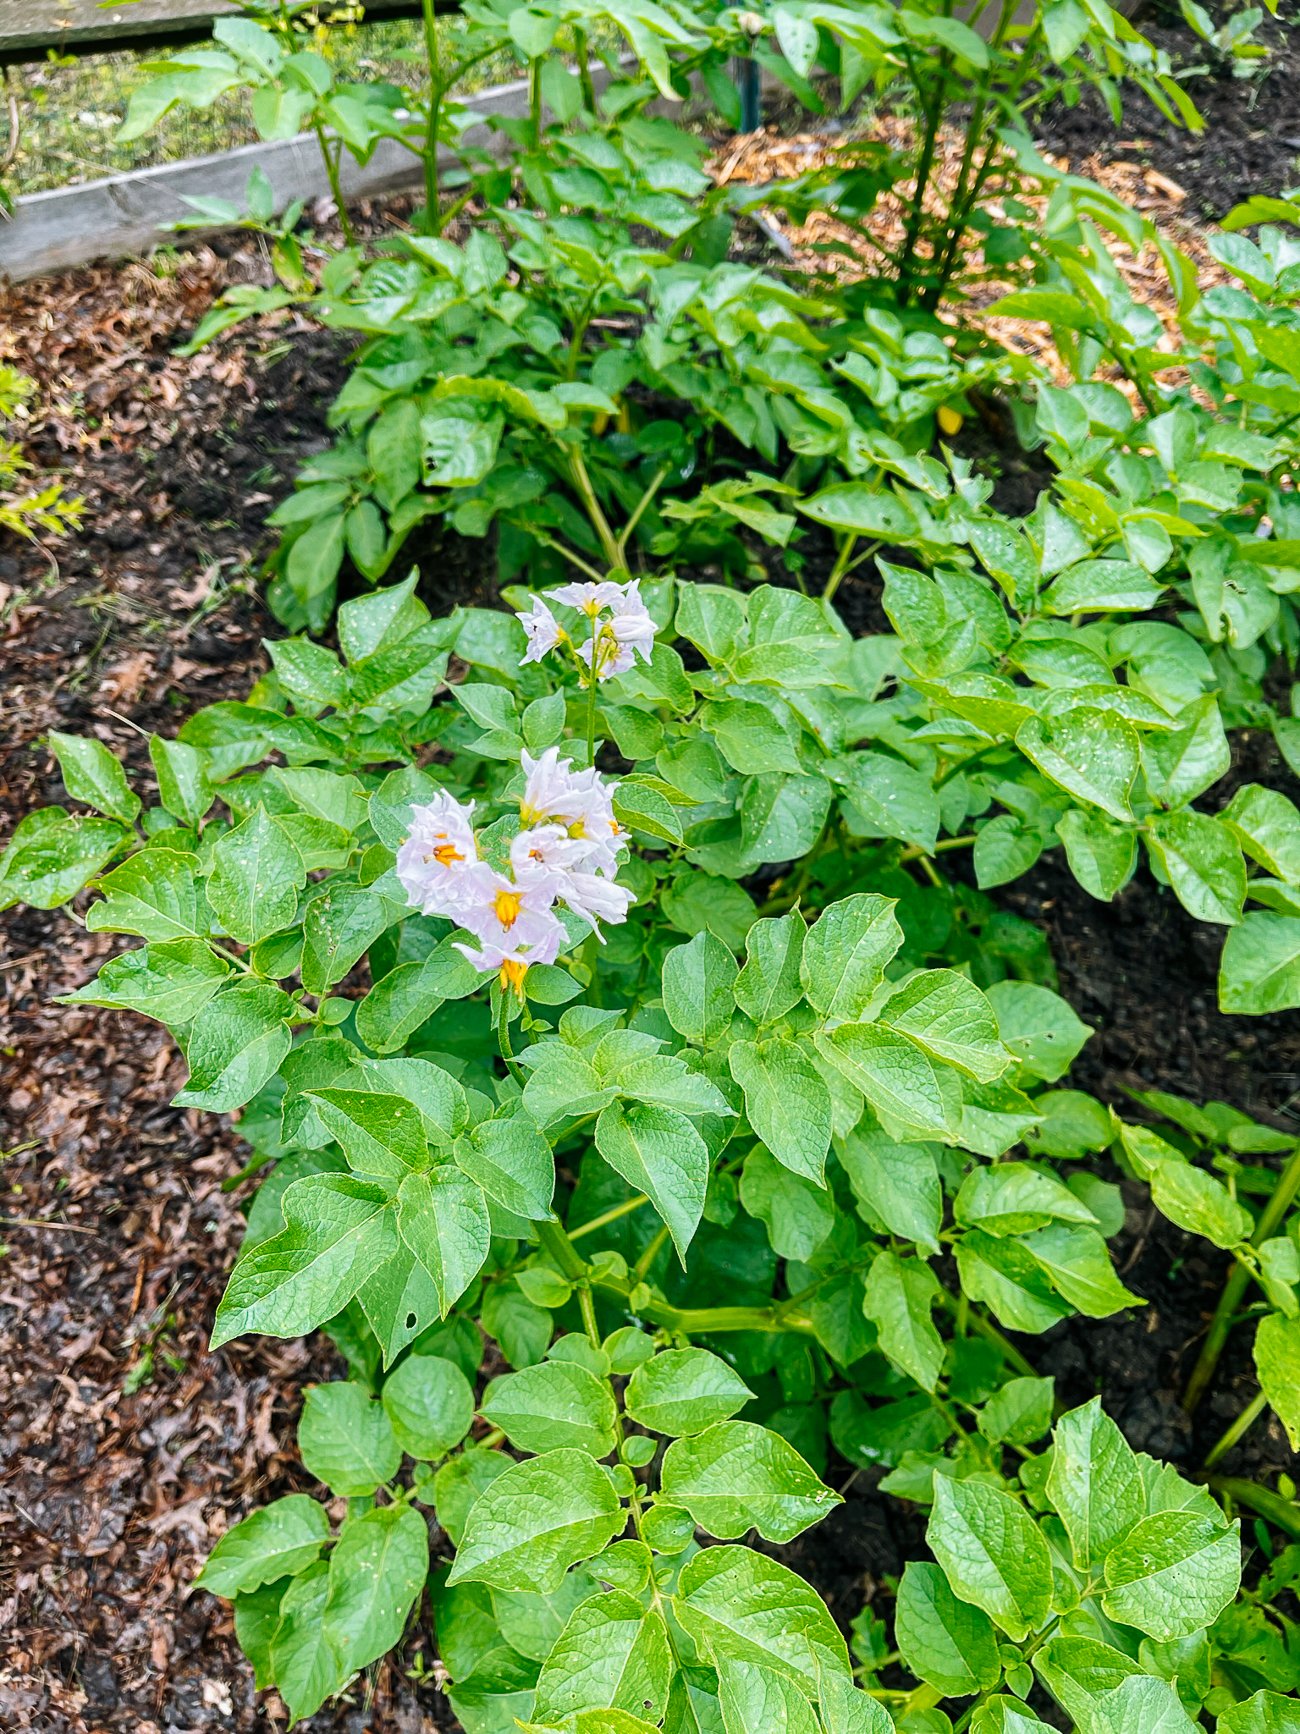 Potato plants flowering